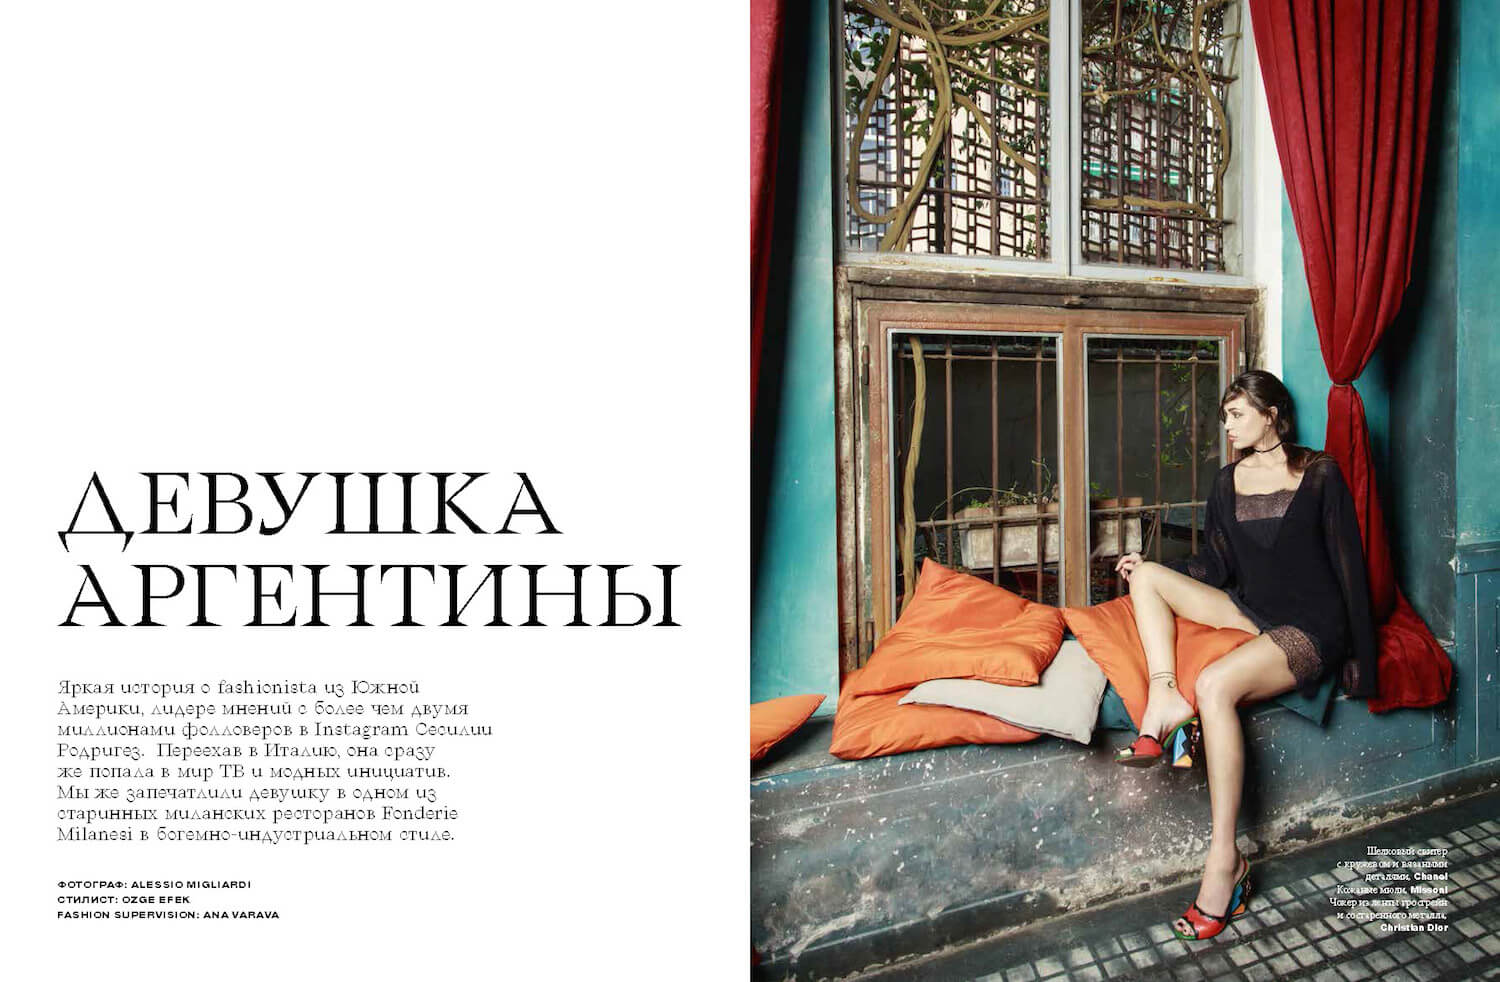 Cecilia Rodriguez, Ukraine, , fashion, magazine, l'Officiel, Ozge Efek, Silvia Sadecka, Alessio Migliardi